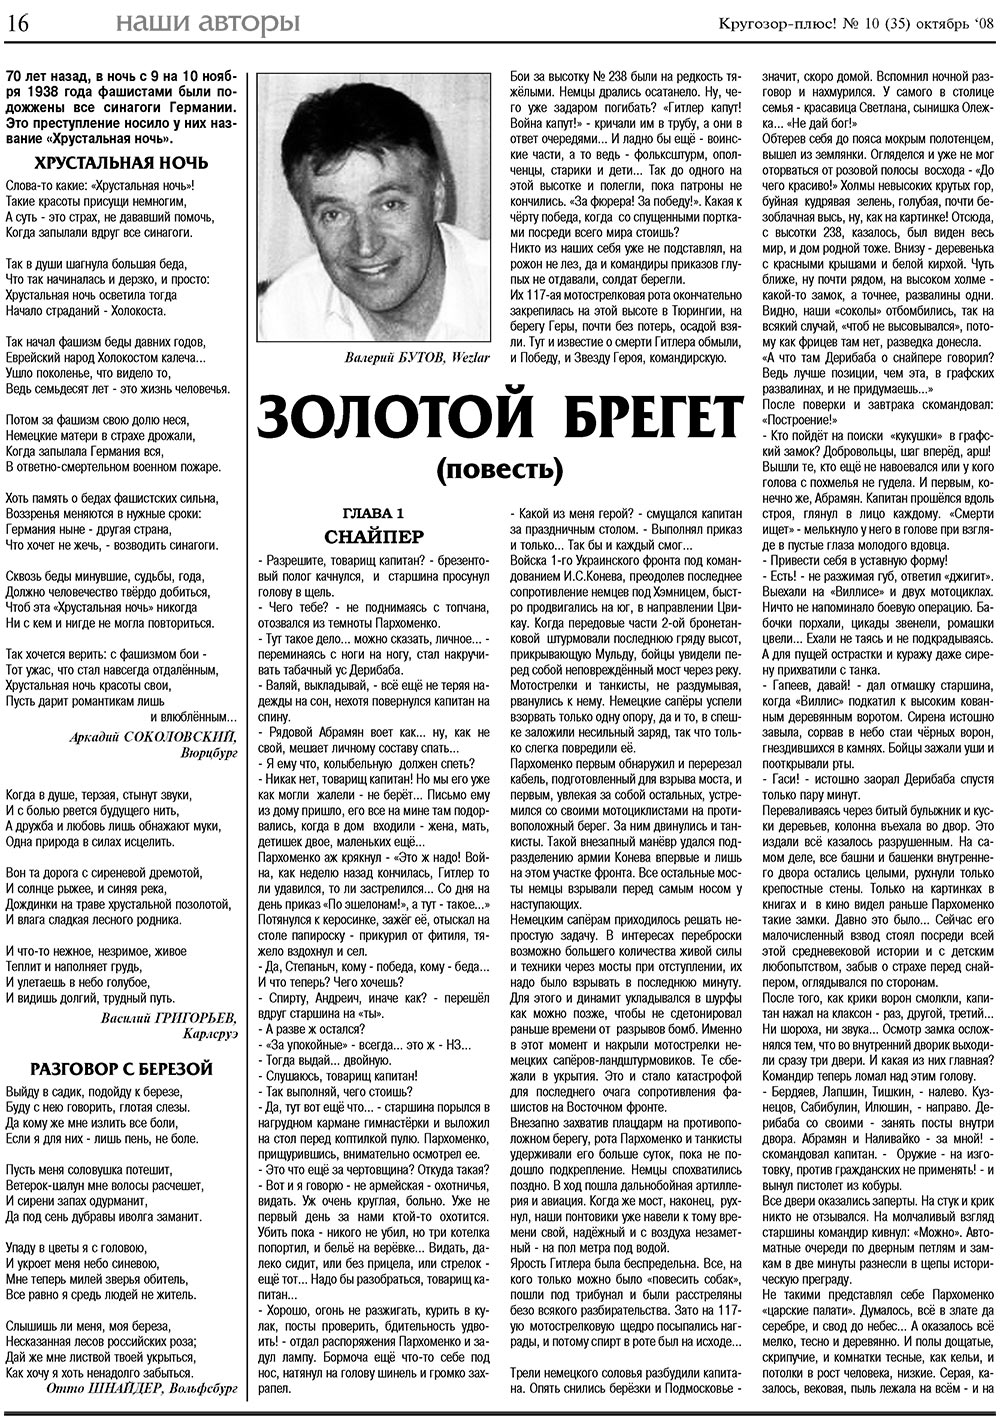 Кругозор плюс! (газета). 2008 год, номер 10, стр. 16